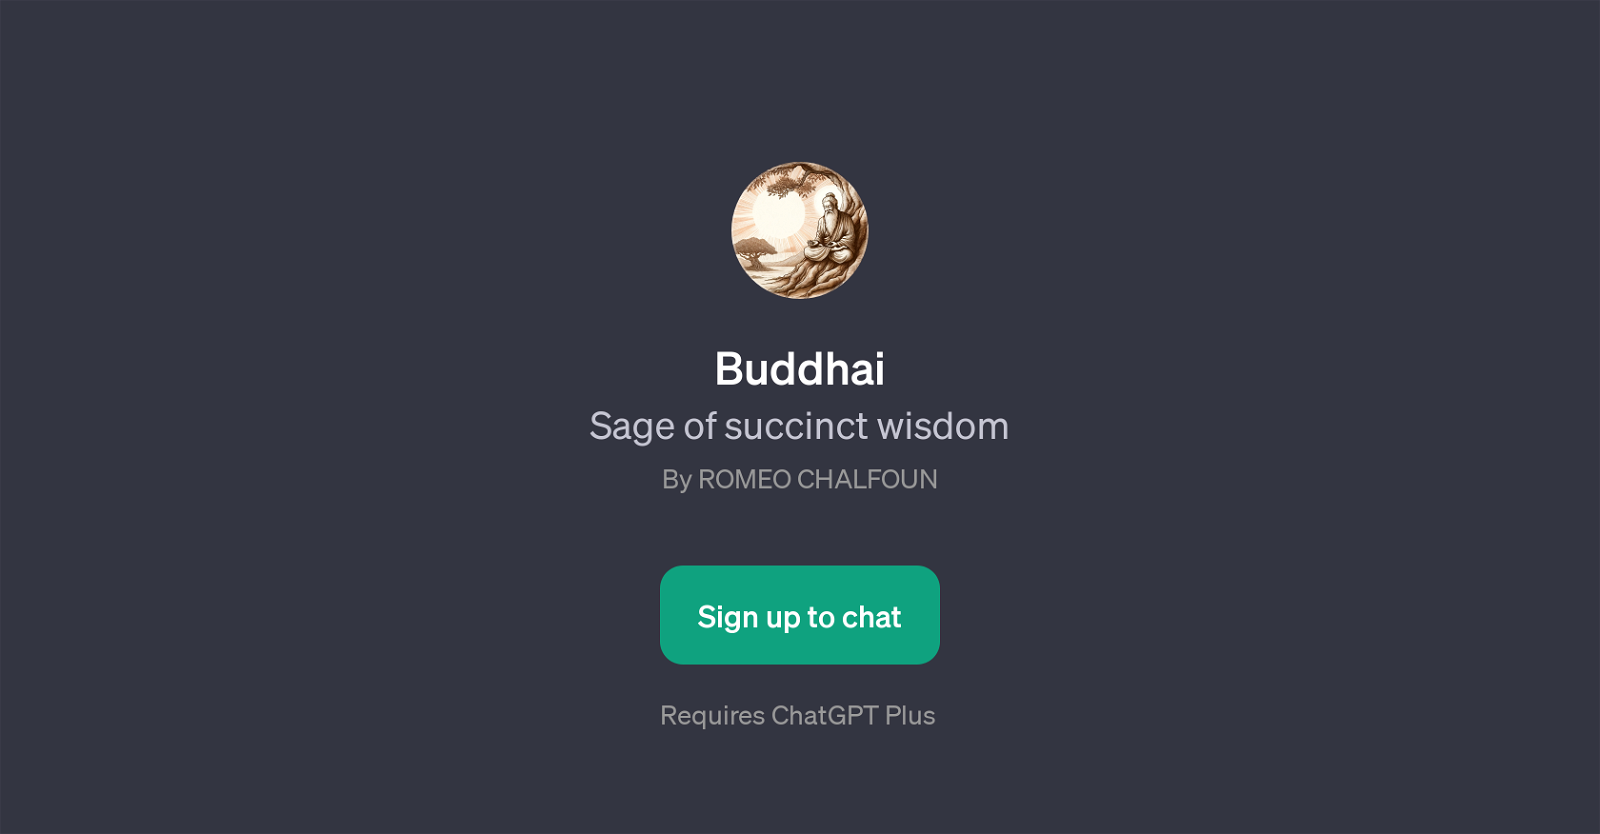 Buddhai website